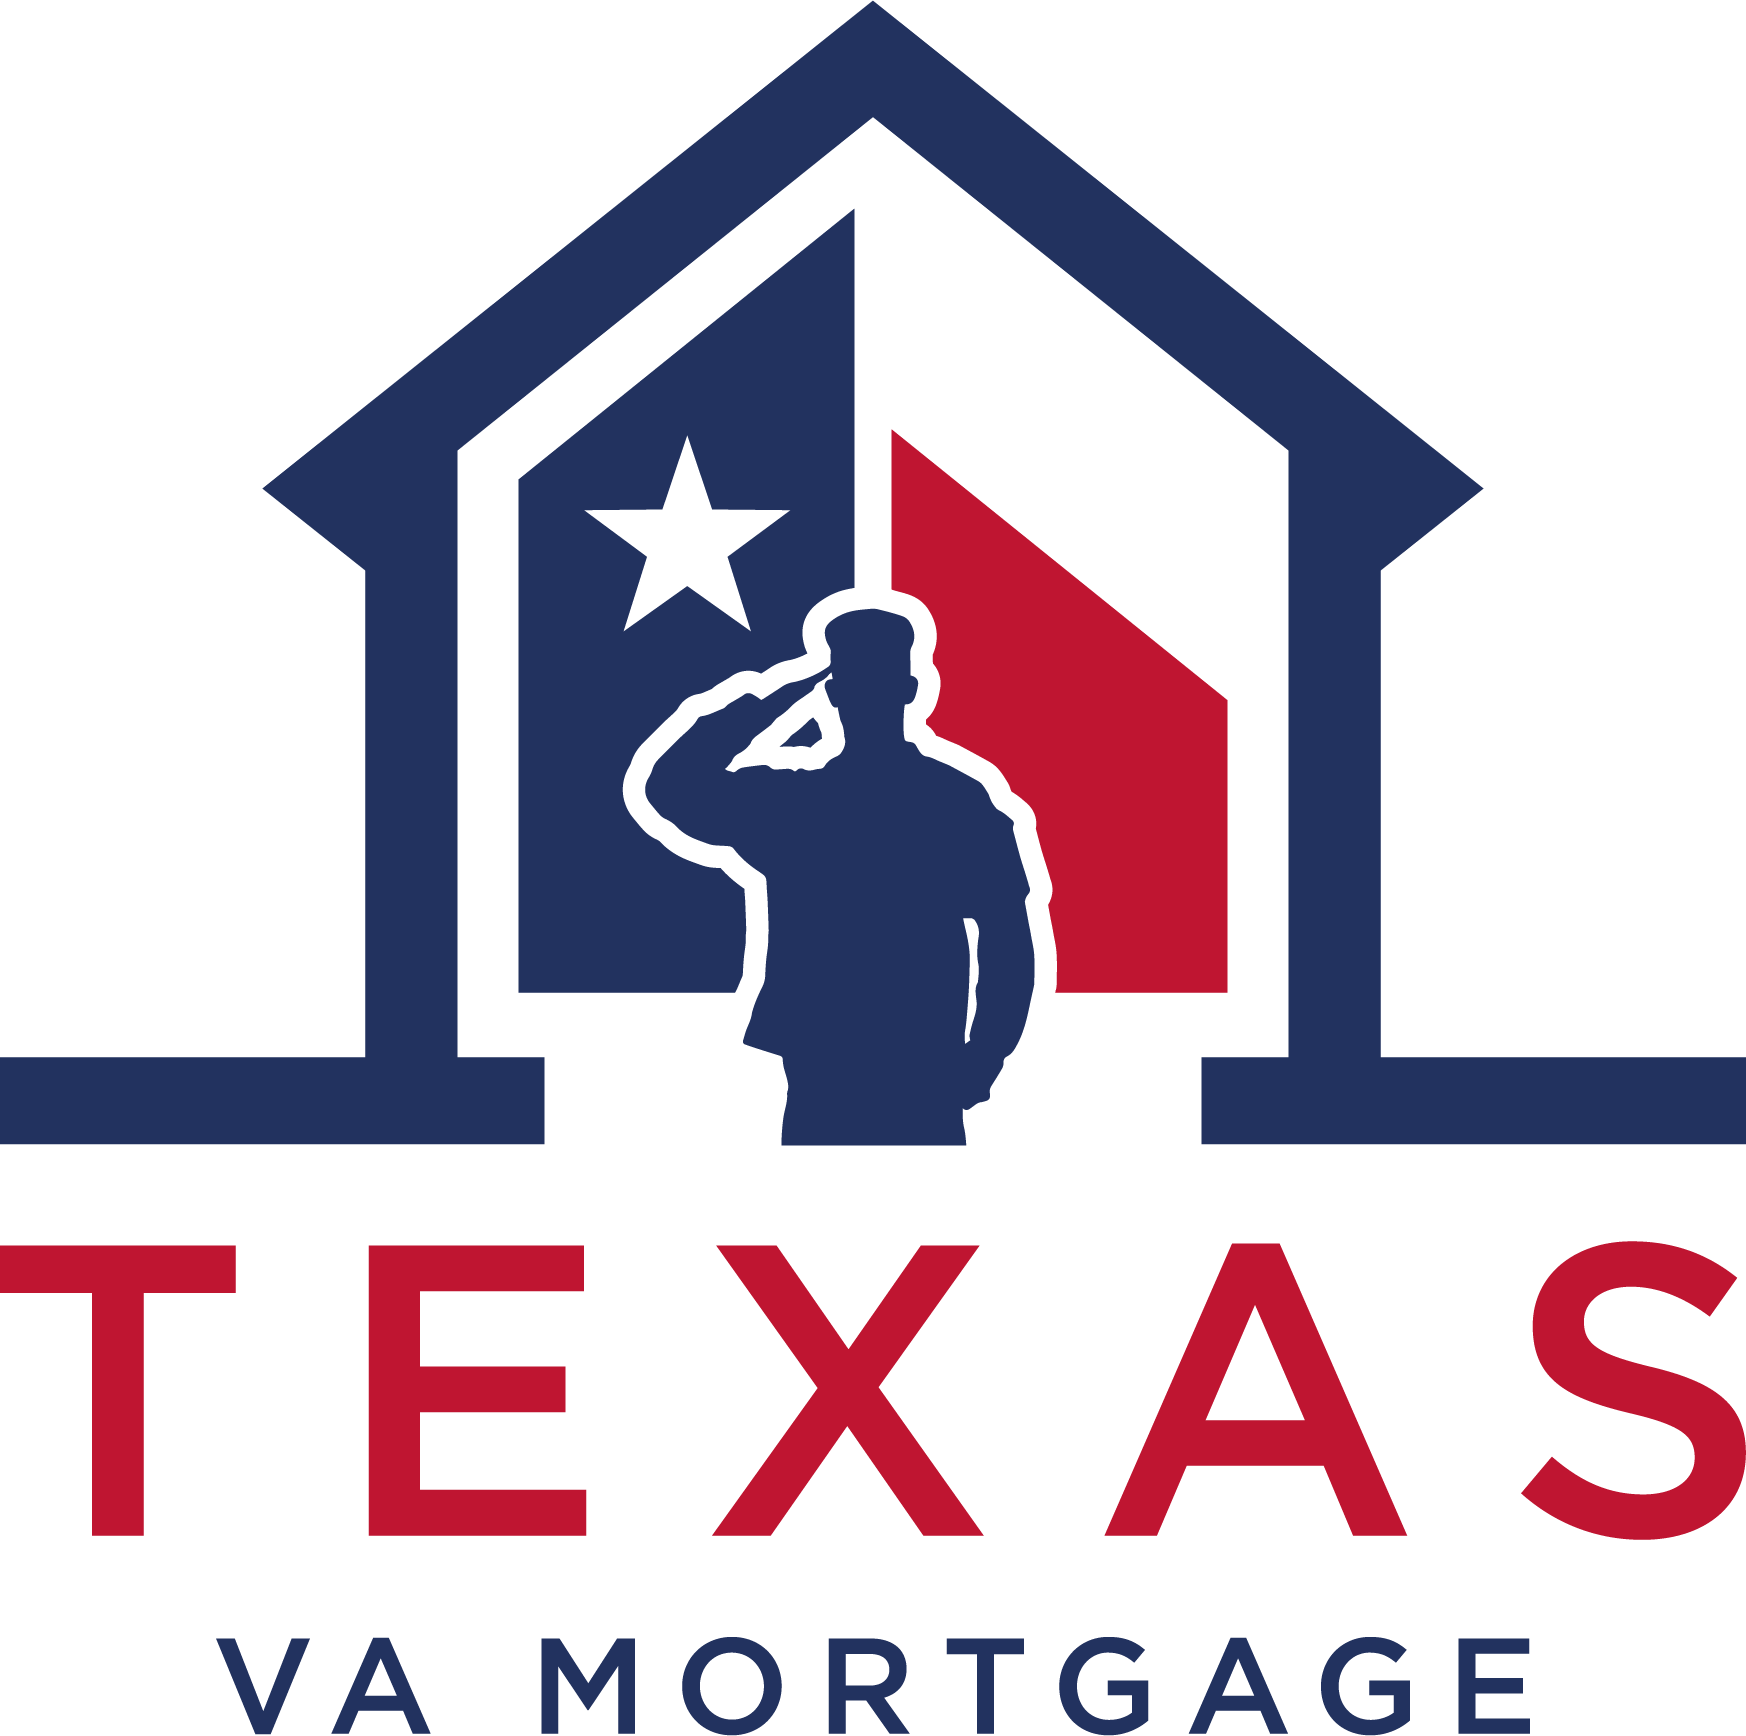 VA Mortgage in Texas